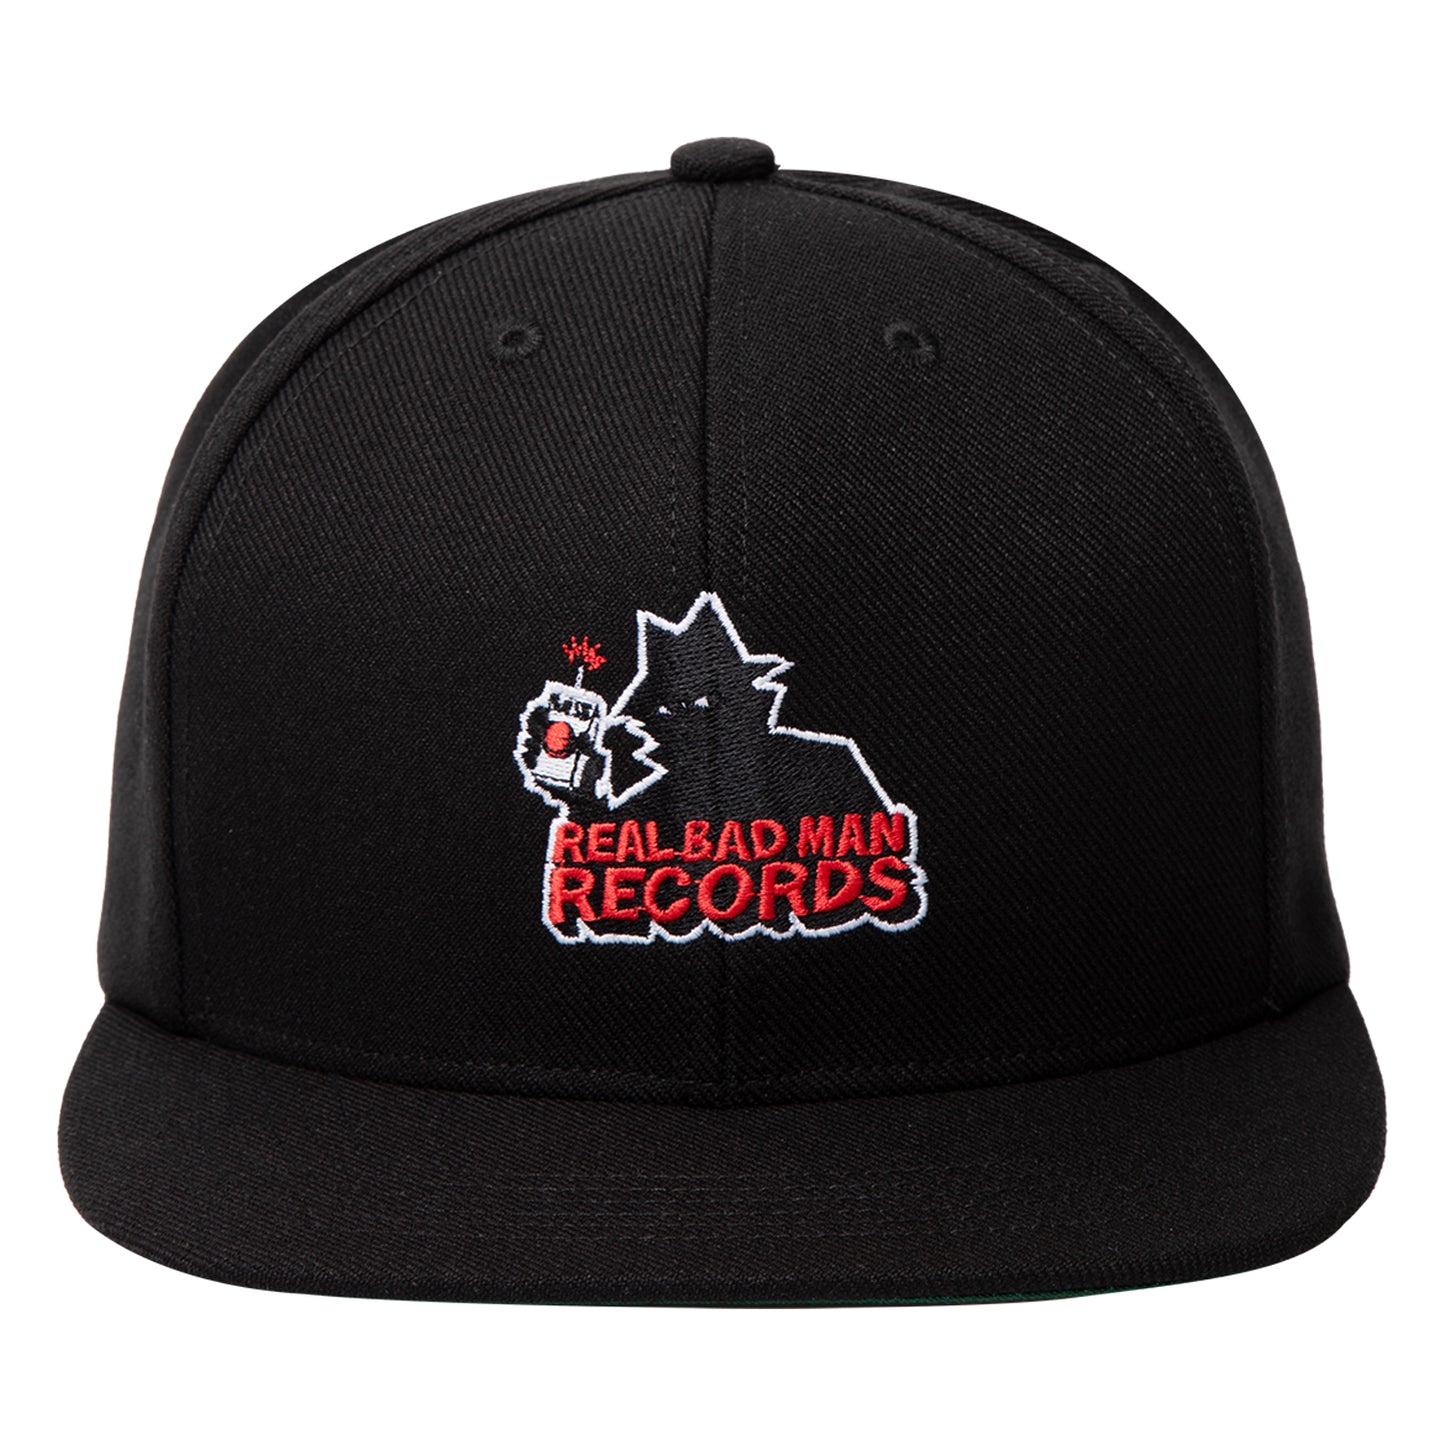 RBM RECORDS SWAP MEET HAT